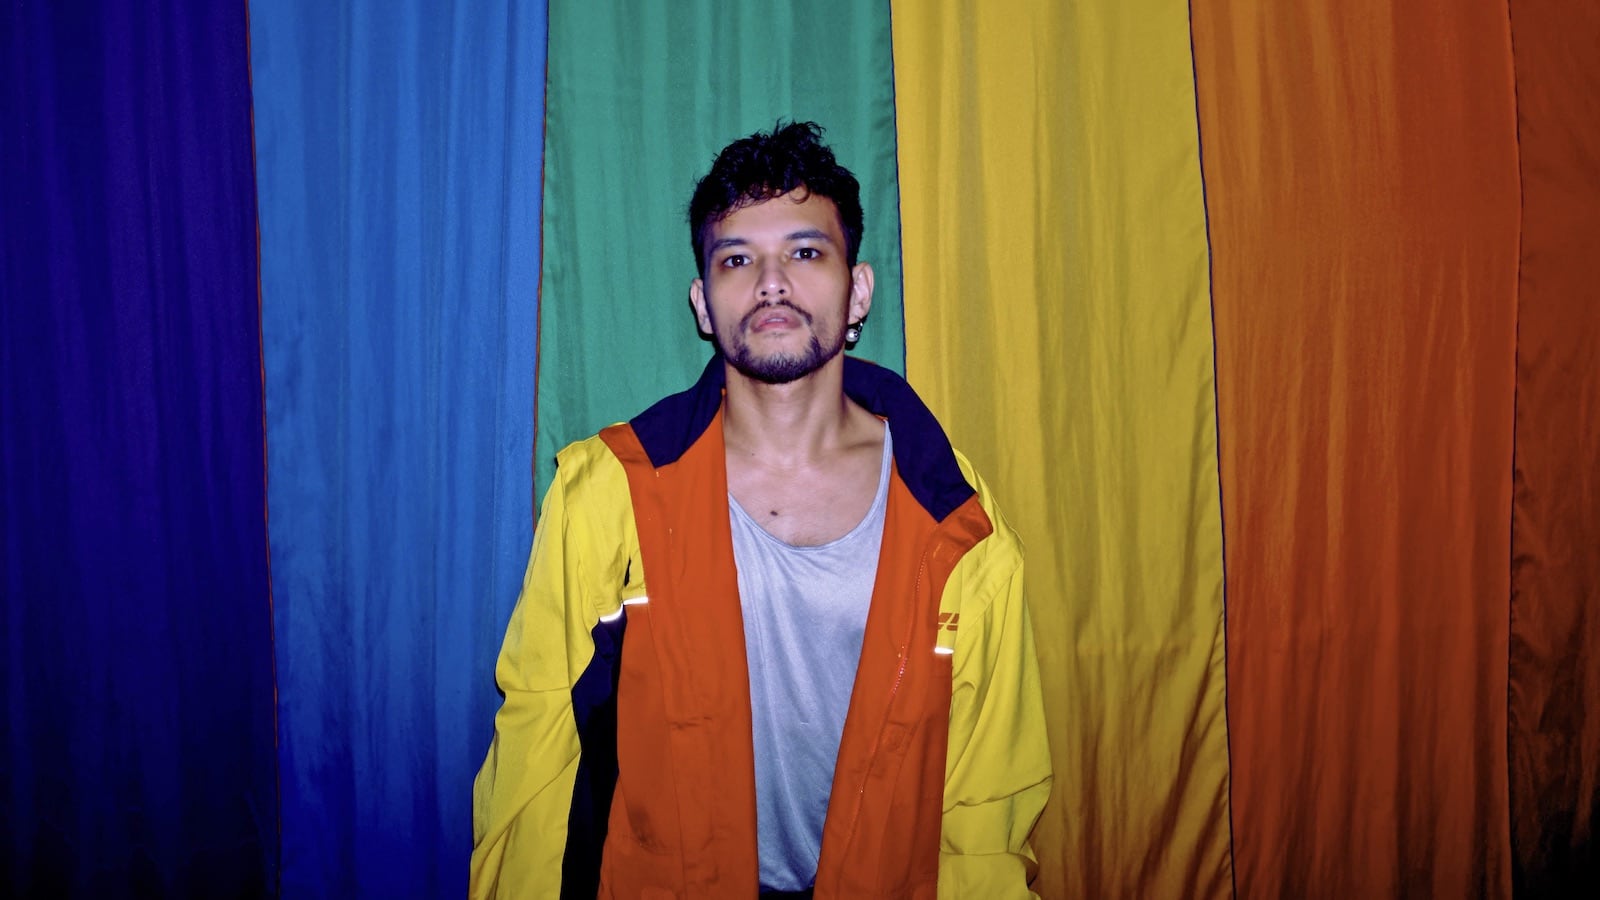 Saroj gay boy in Bangkok interview about gay life in Thailand